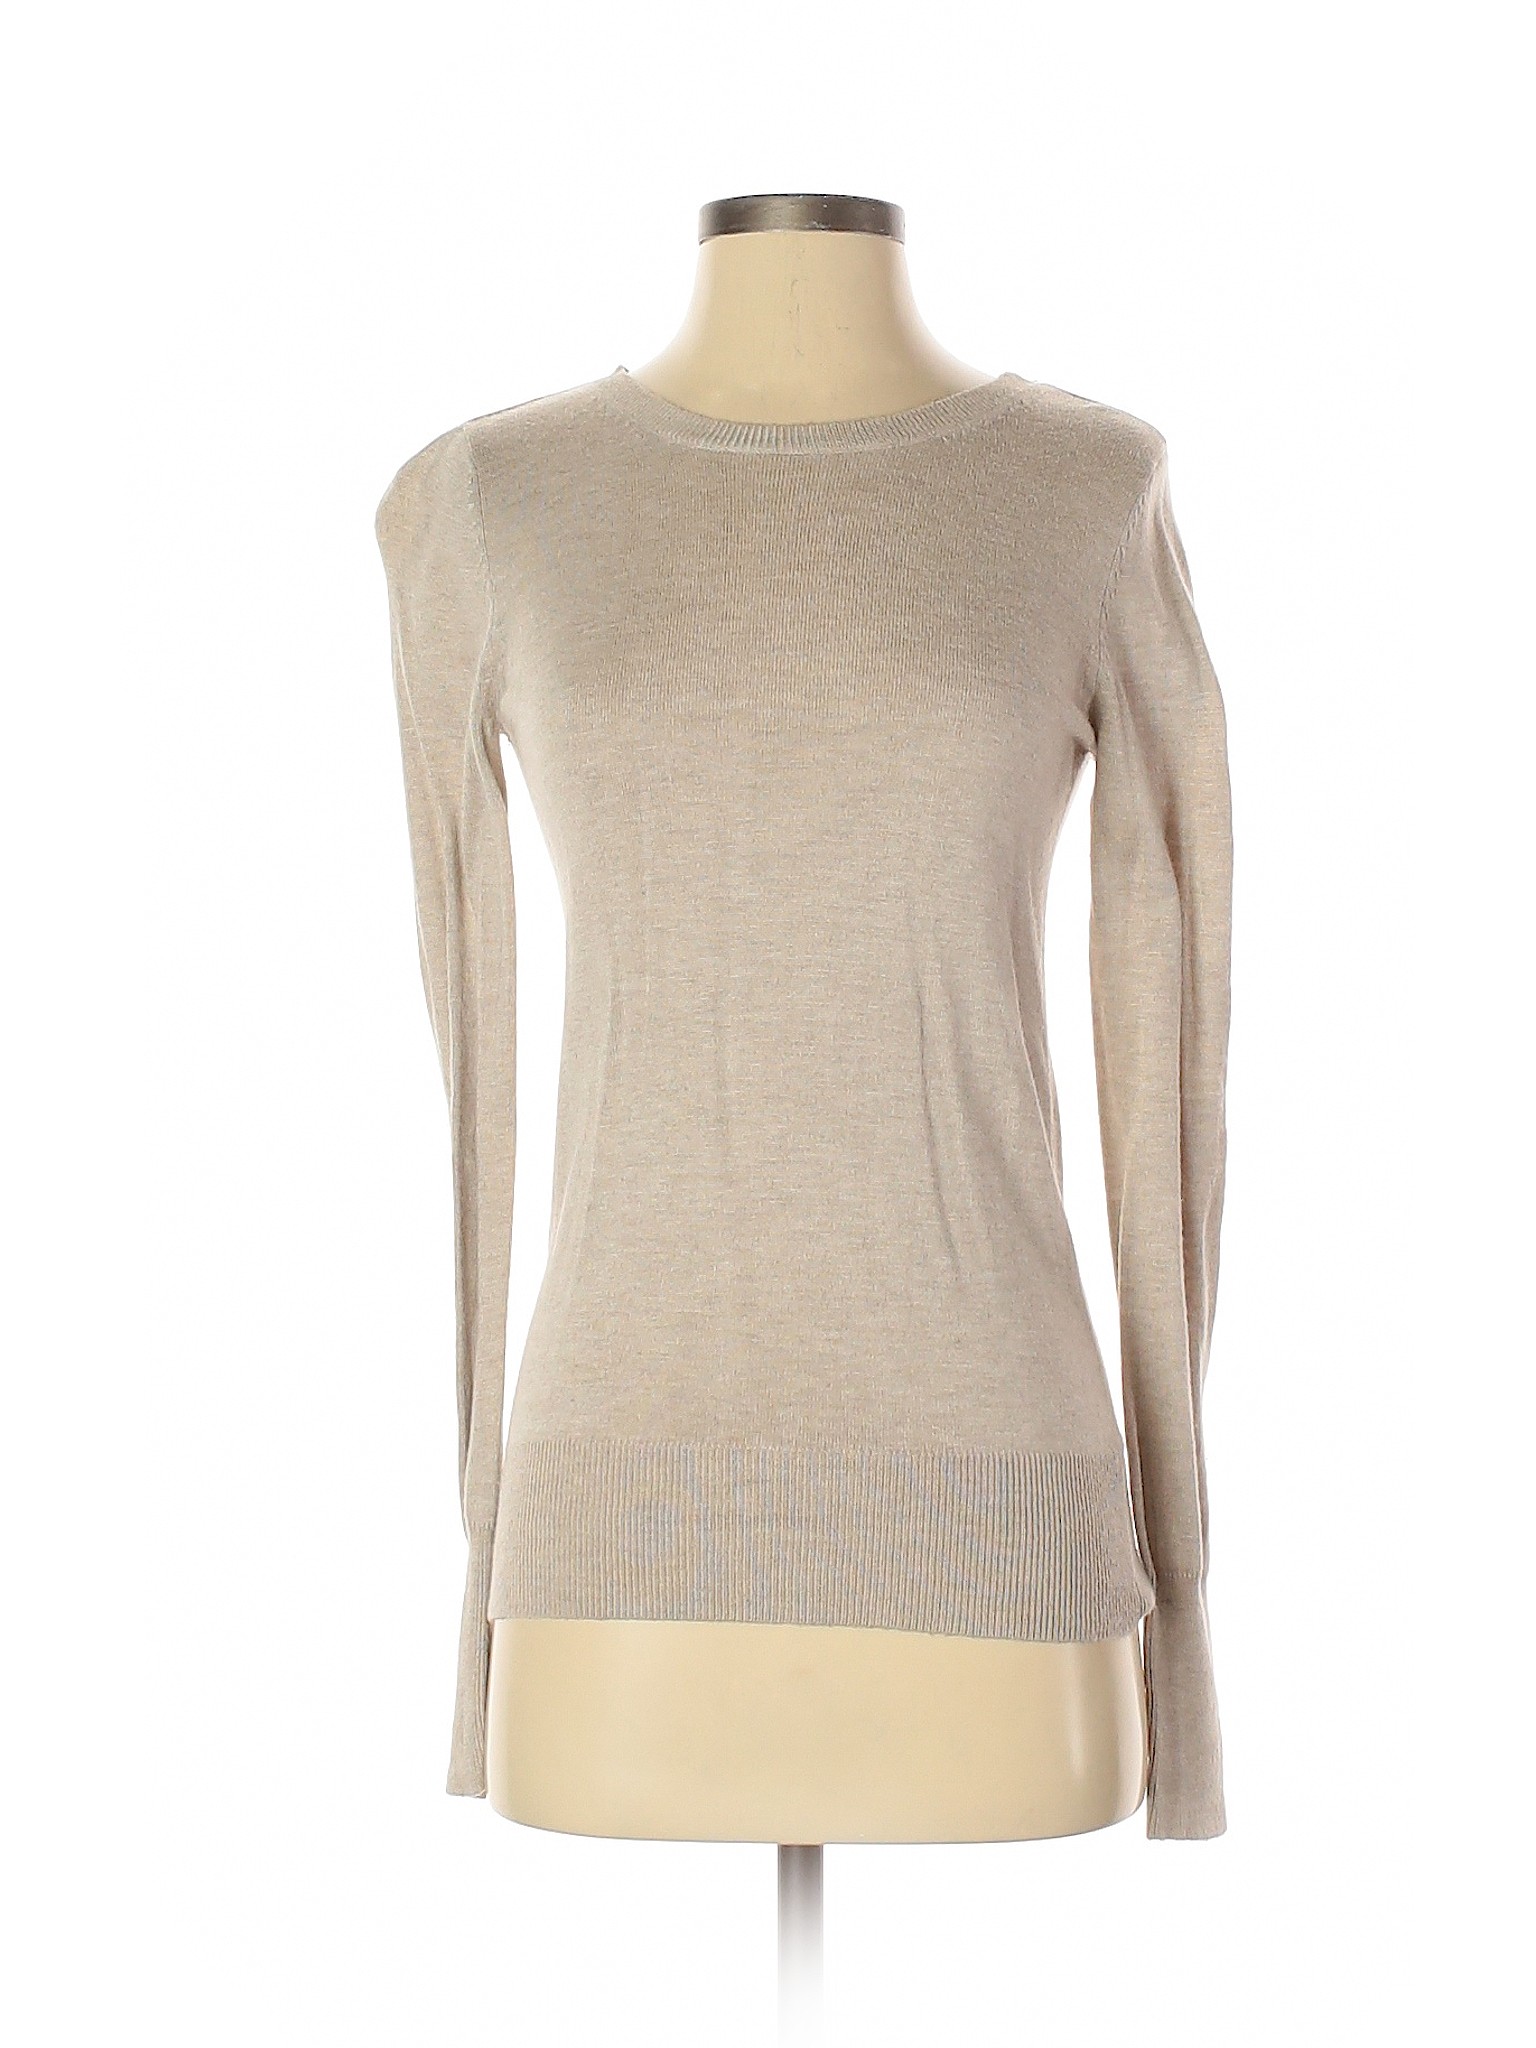 Mossimo Women Brown Pullover Sweater XS | eBay